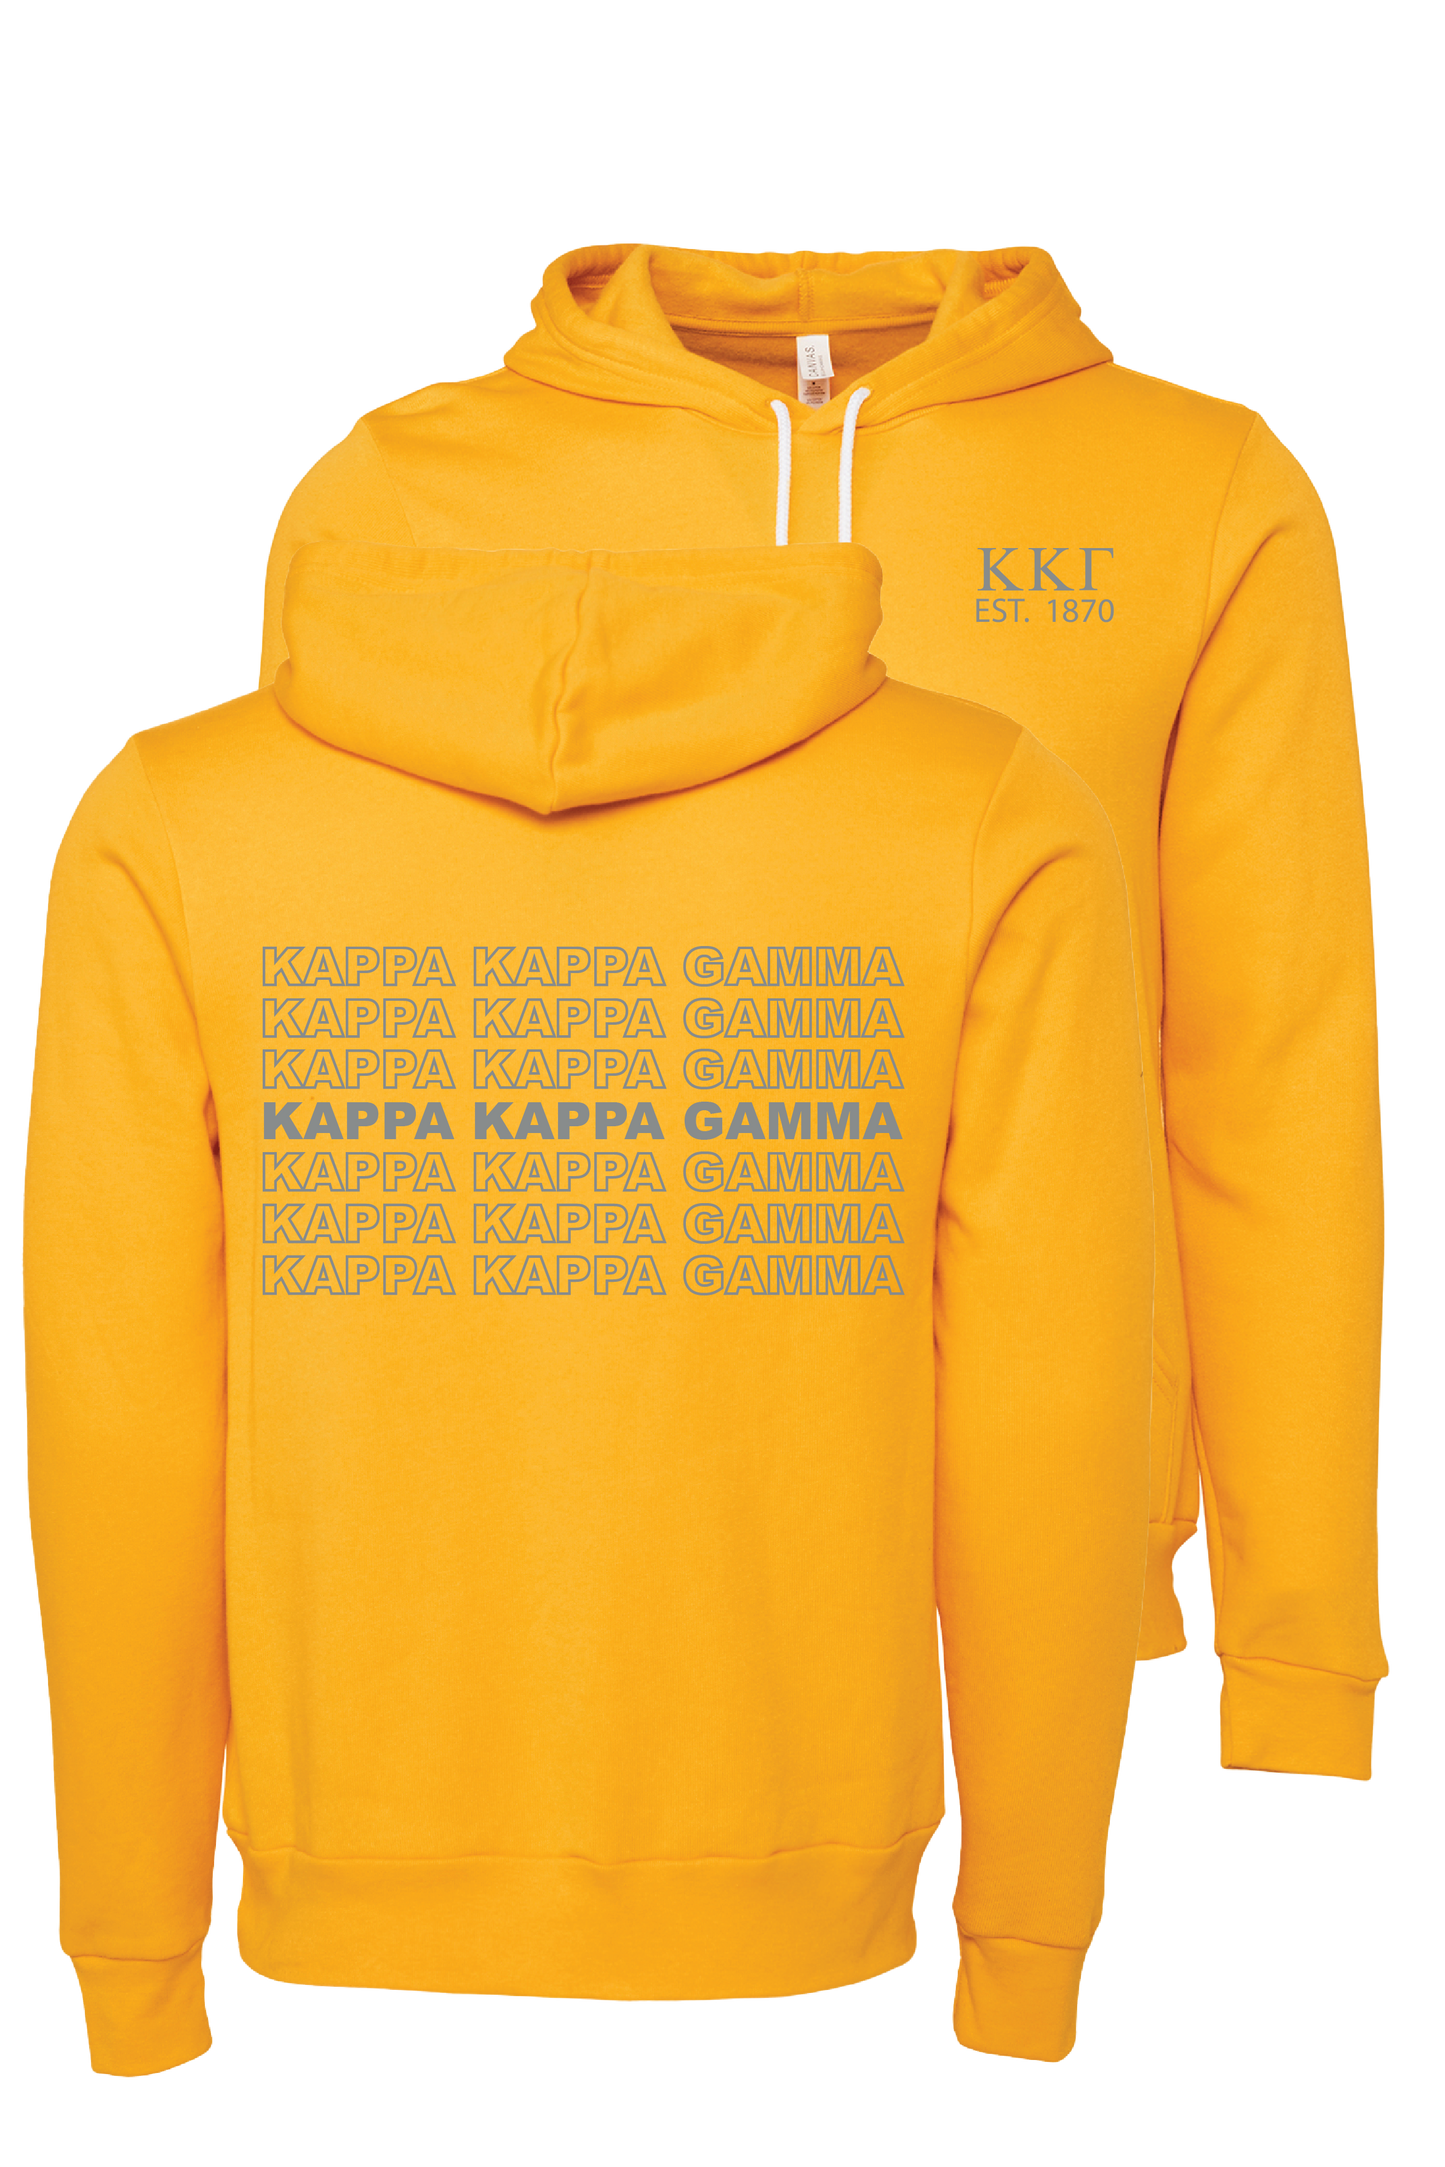 Kappa Kappa Gamma Repeating Name Hooded Sweatshirts